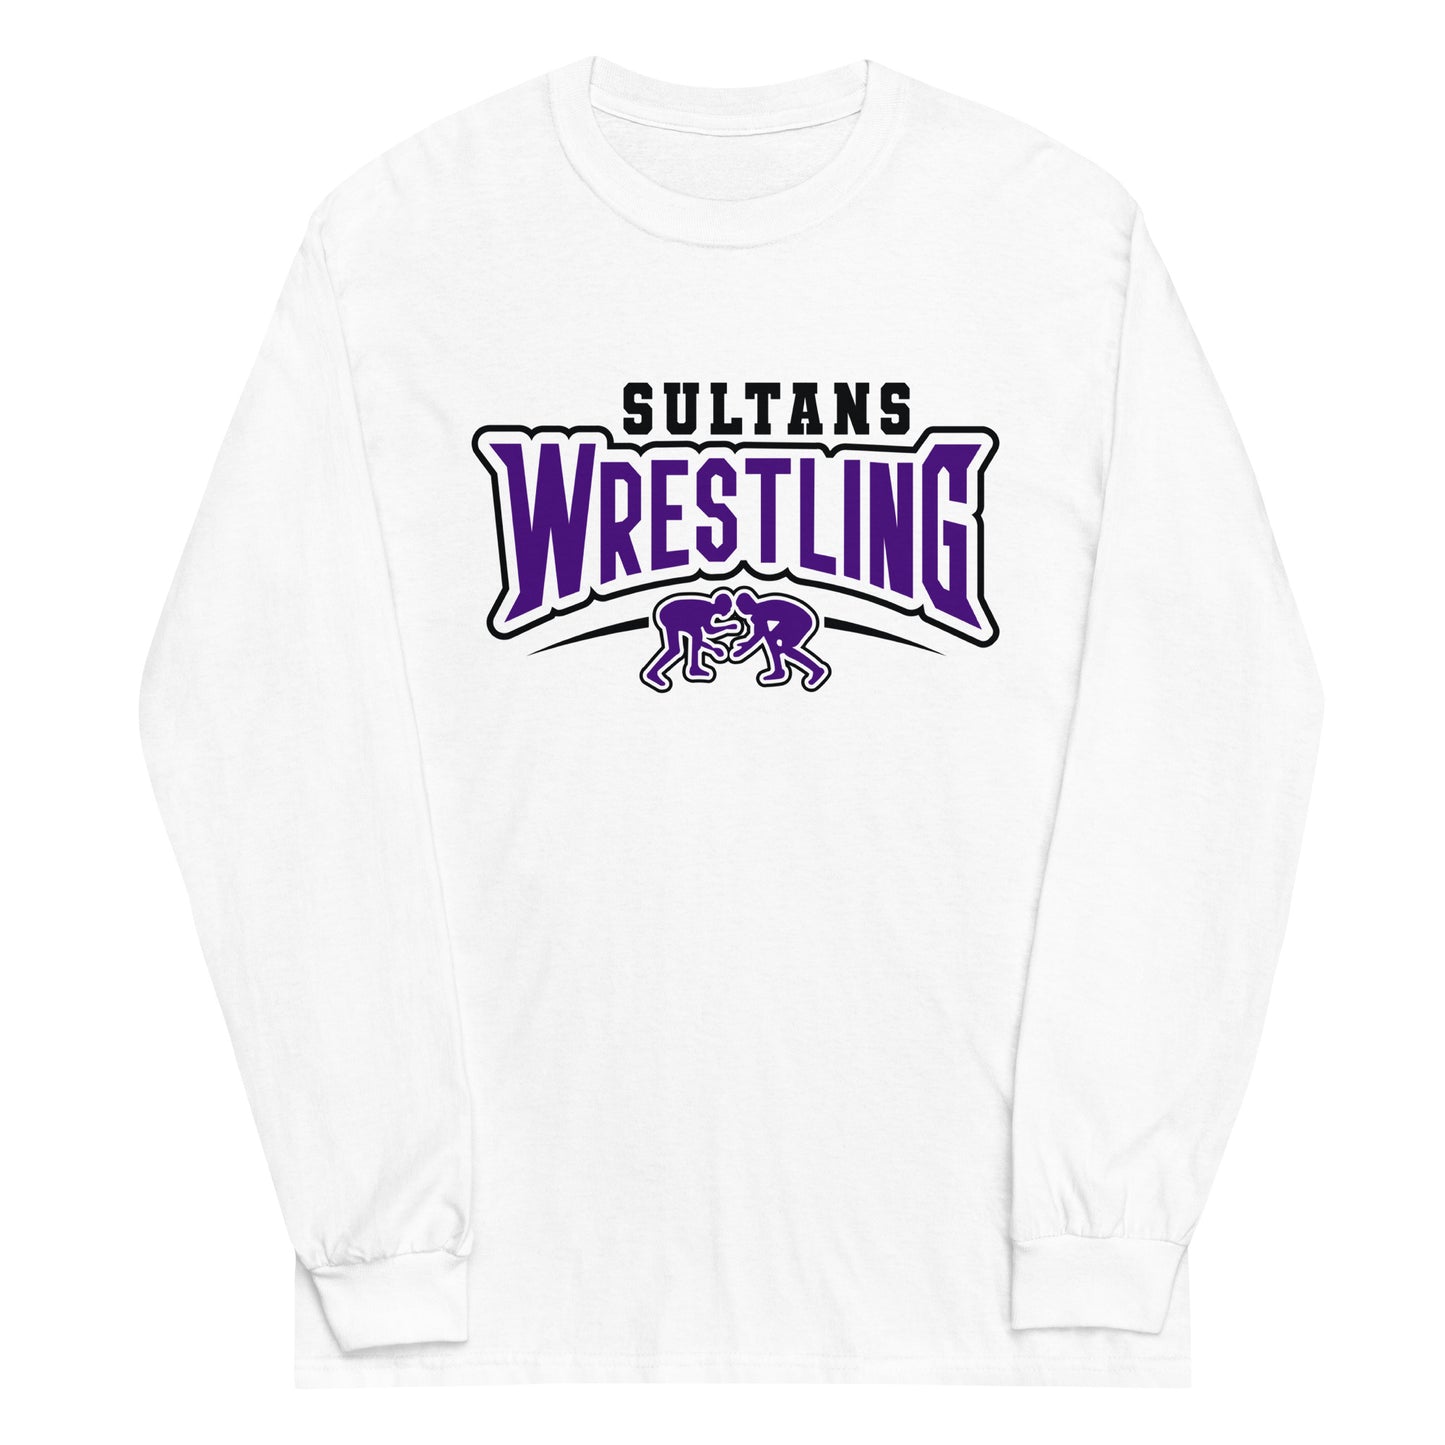 Unisex Wrestling Long Sleeve Shirt